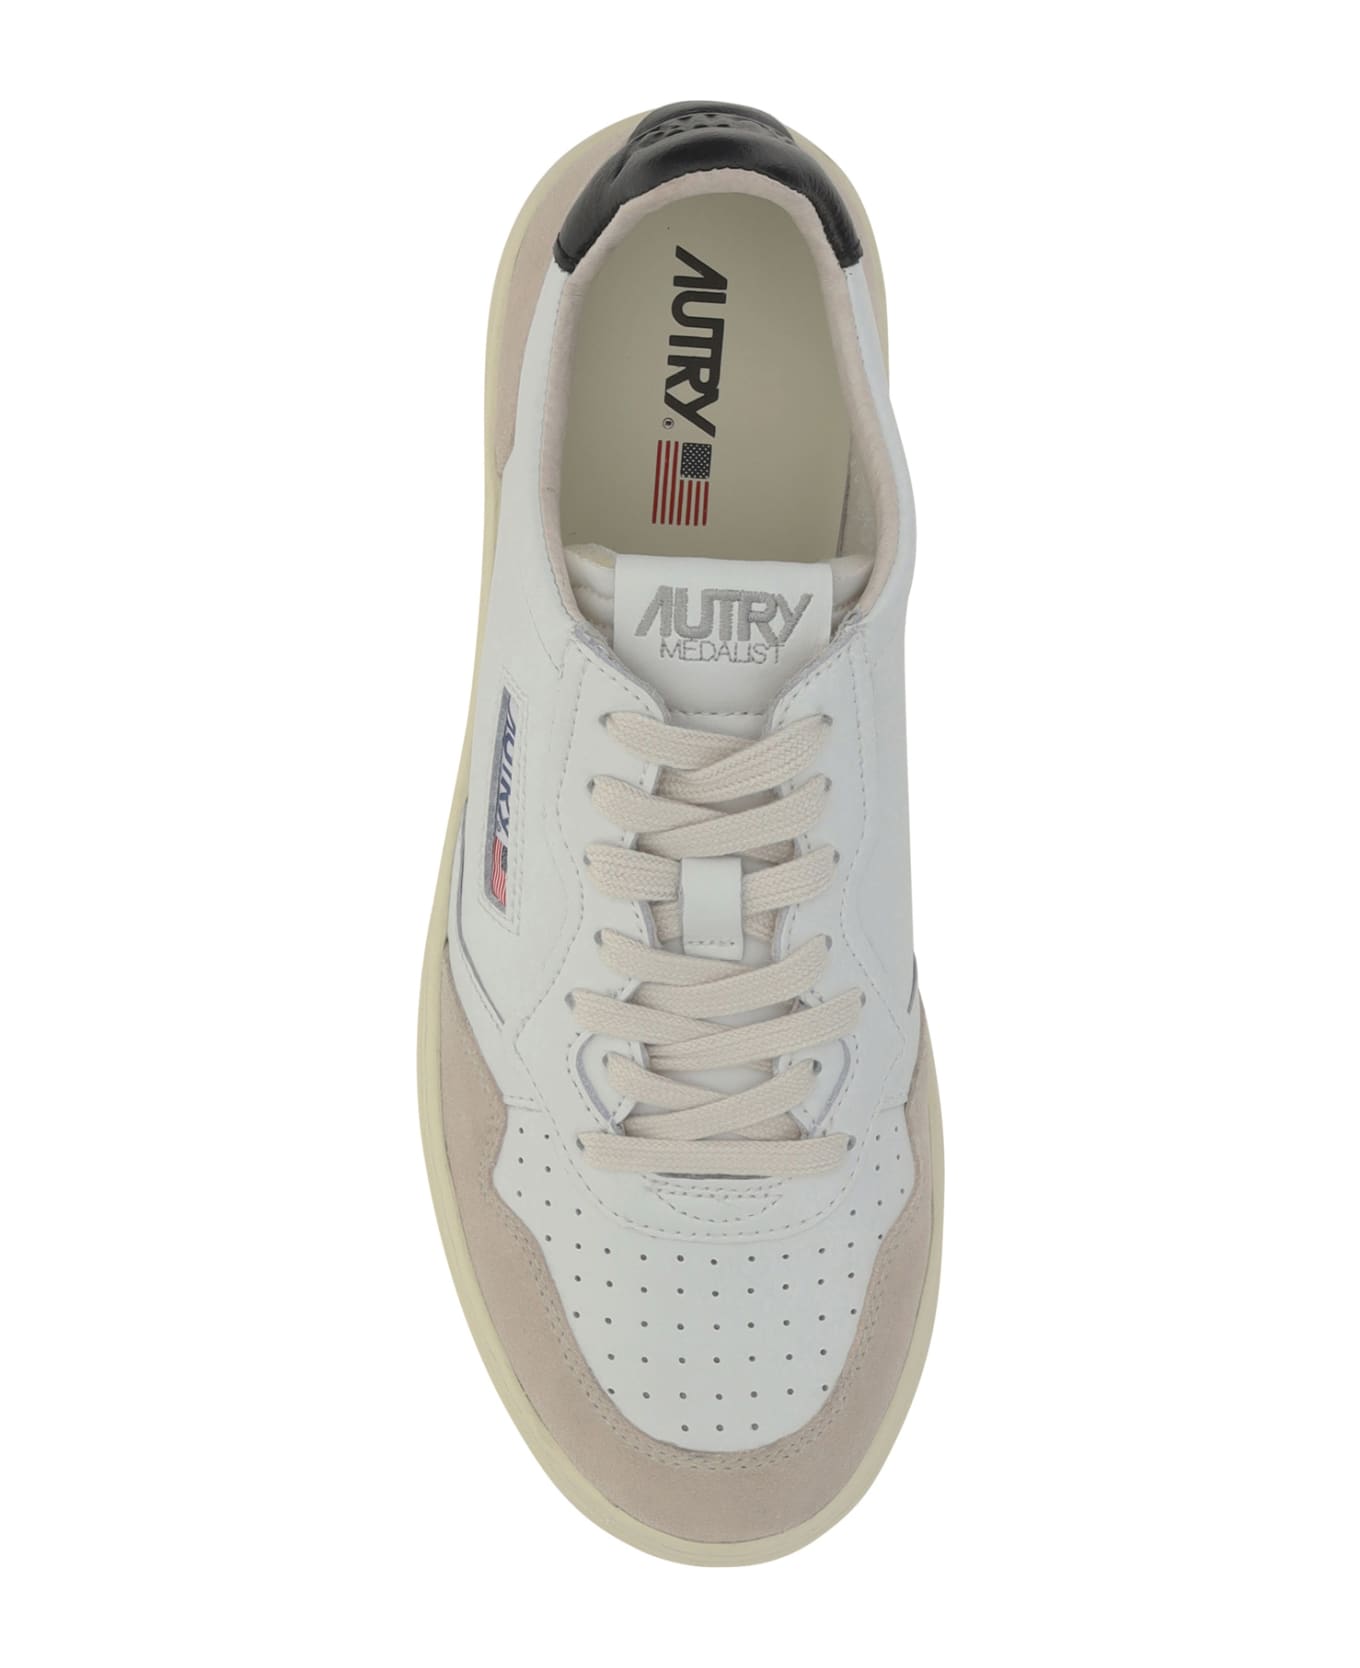 Autry Medialist Sneakers - Bianco/Nero